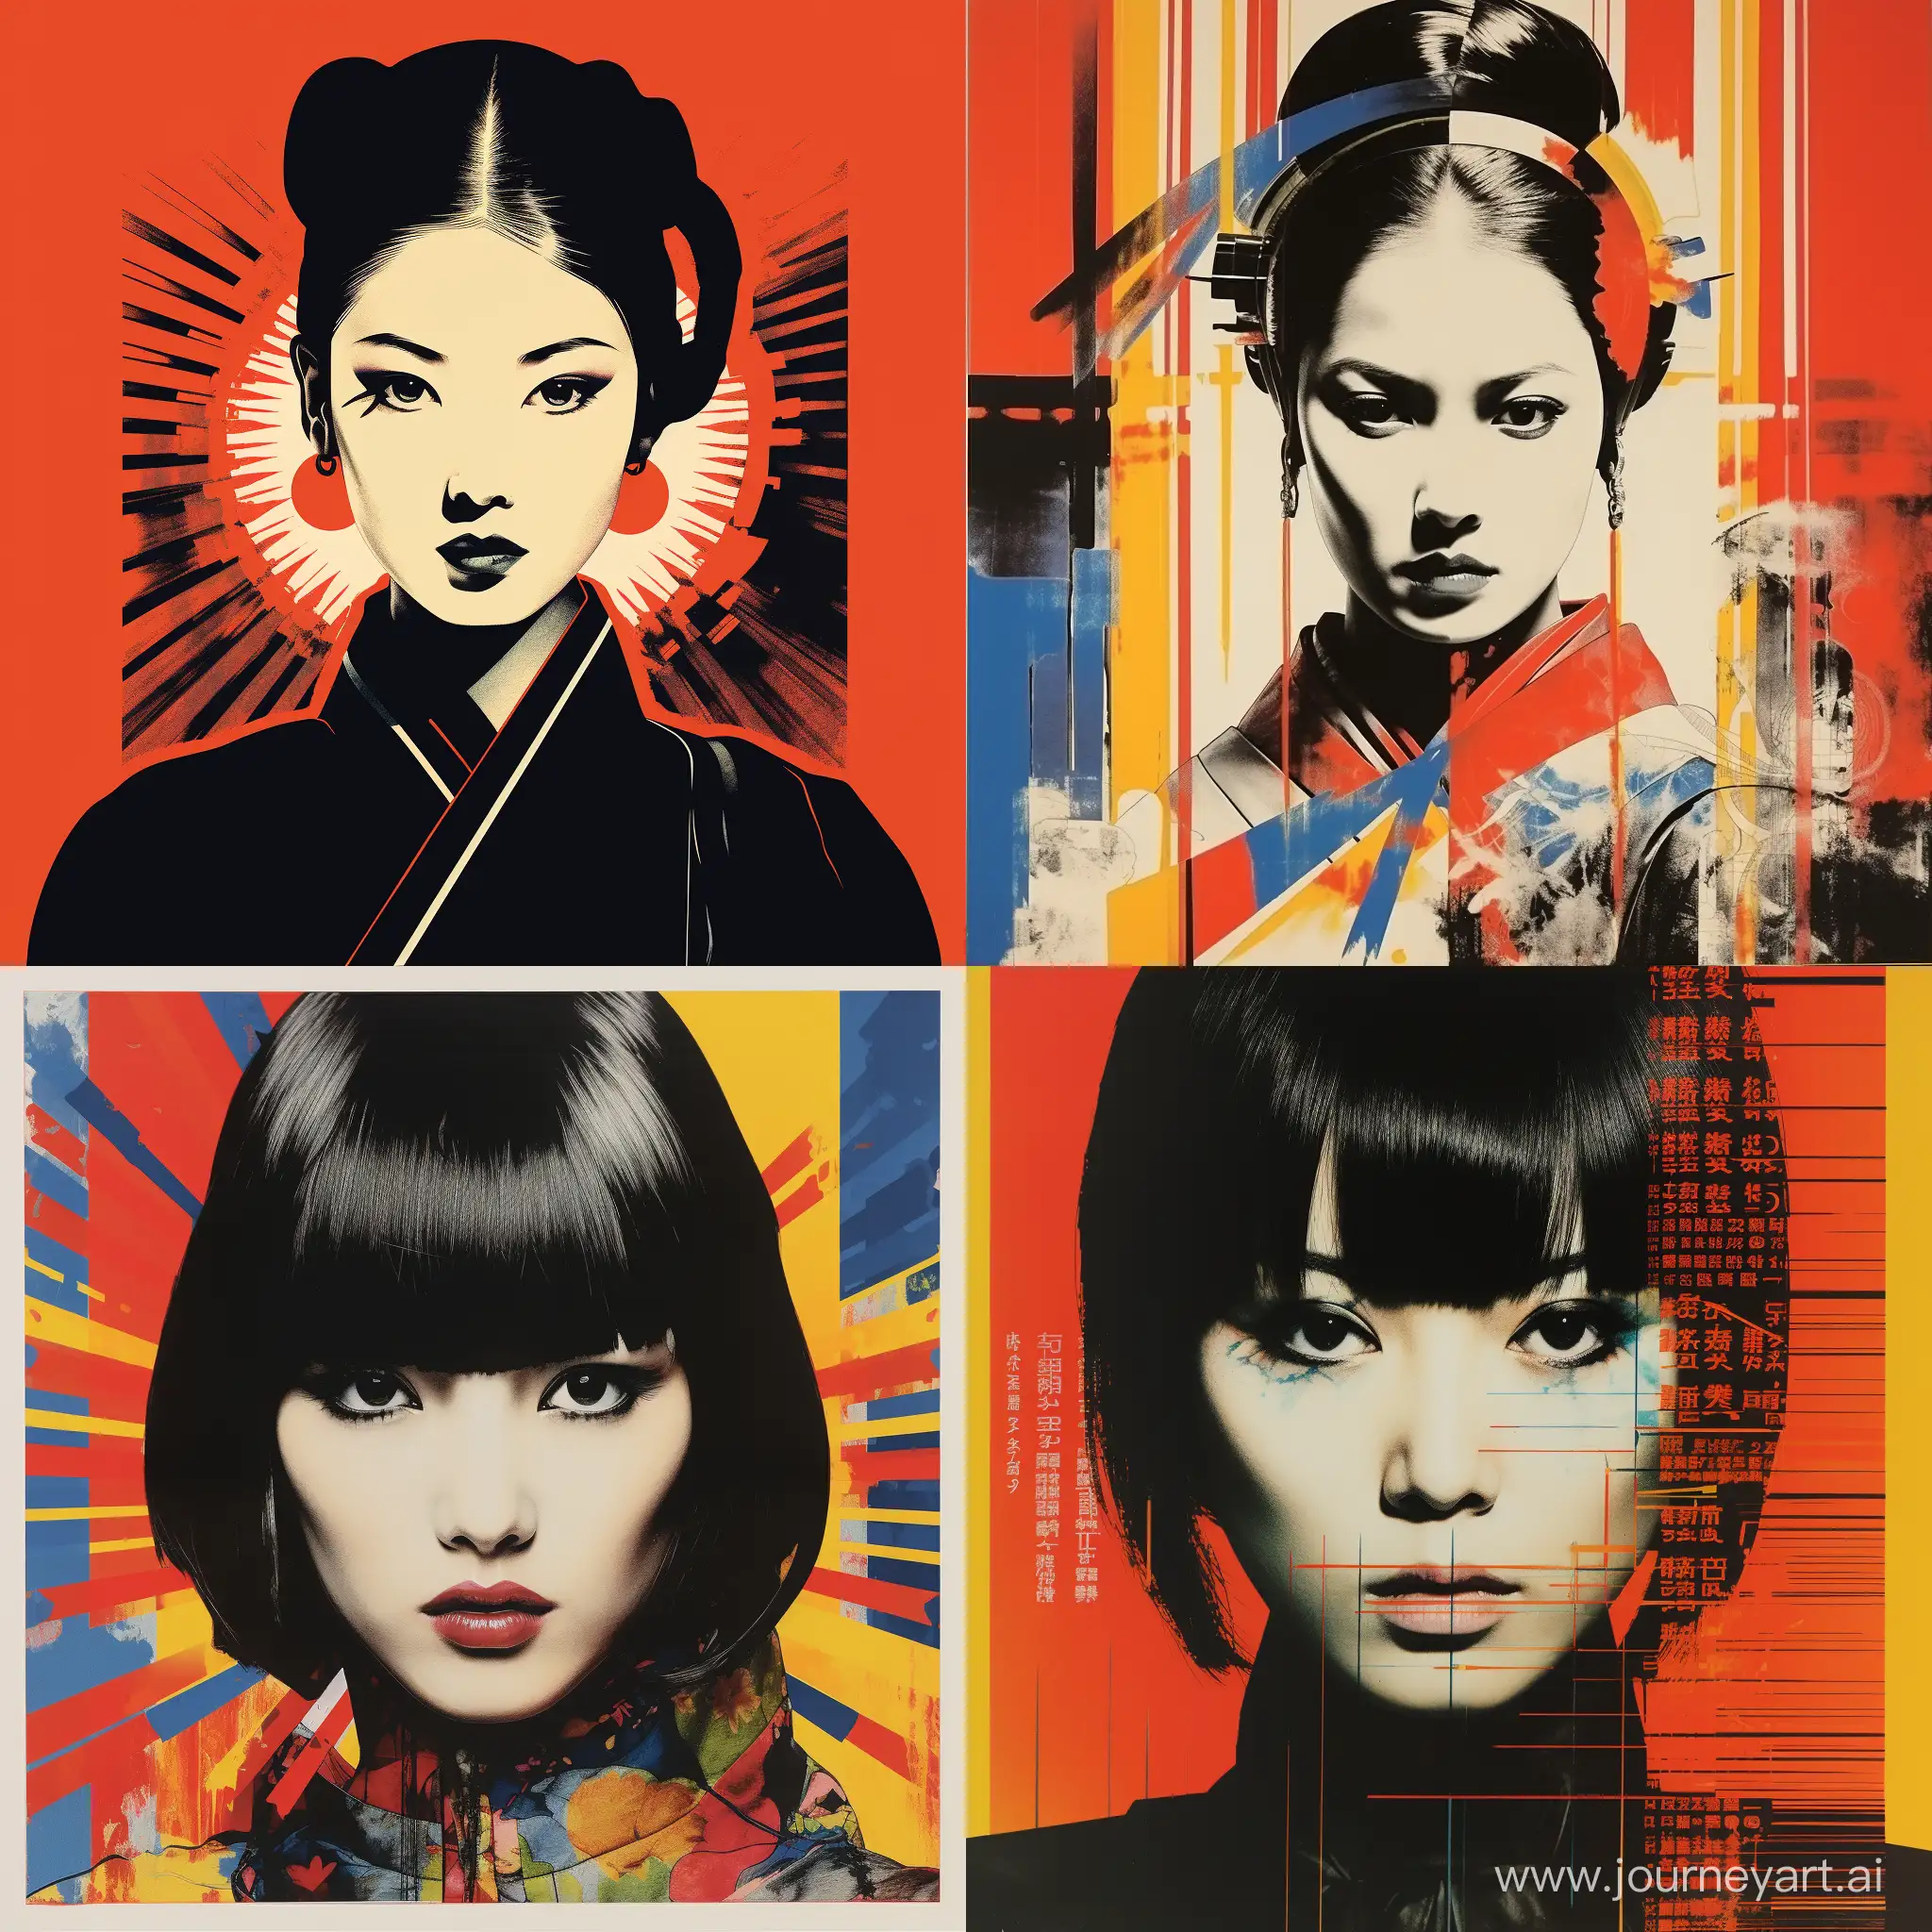 Colorful Japanese retro poster, a female Caucasian assassin, contrast, mix of avant-garde art